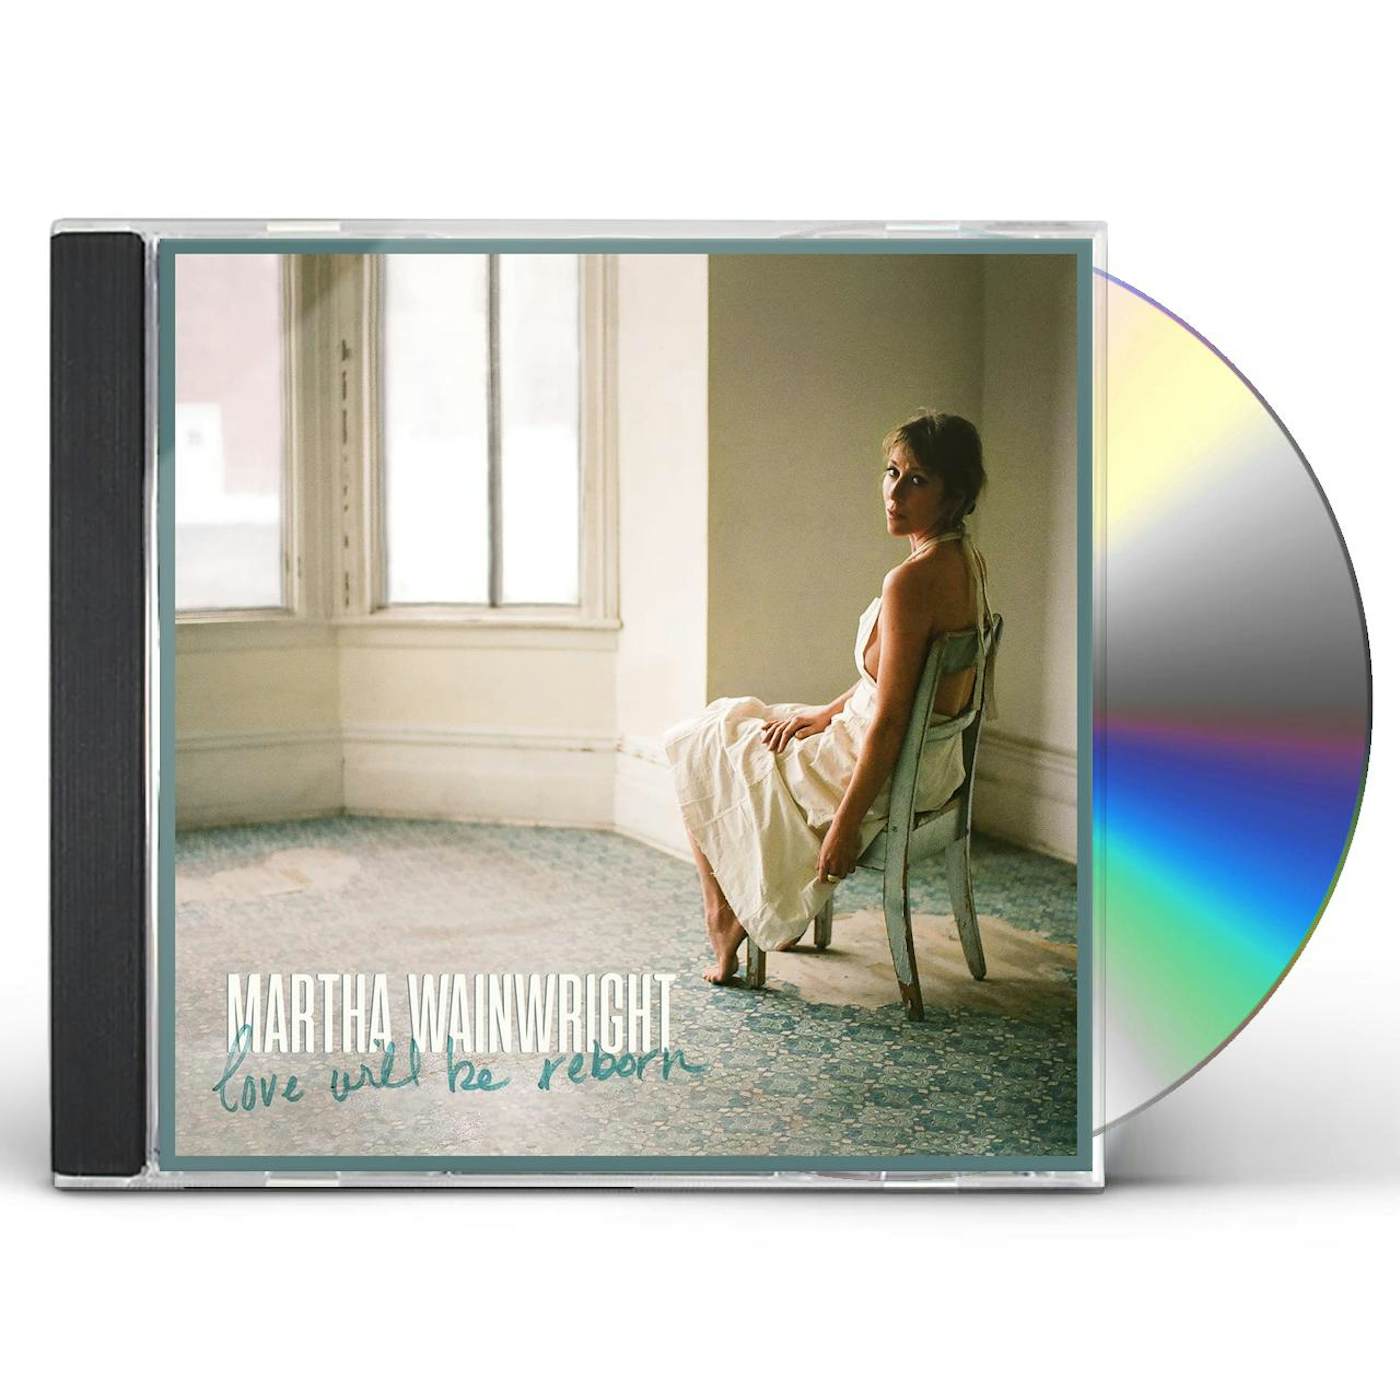 Martha Wainwright LOVE WILL BE REBORN CD